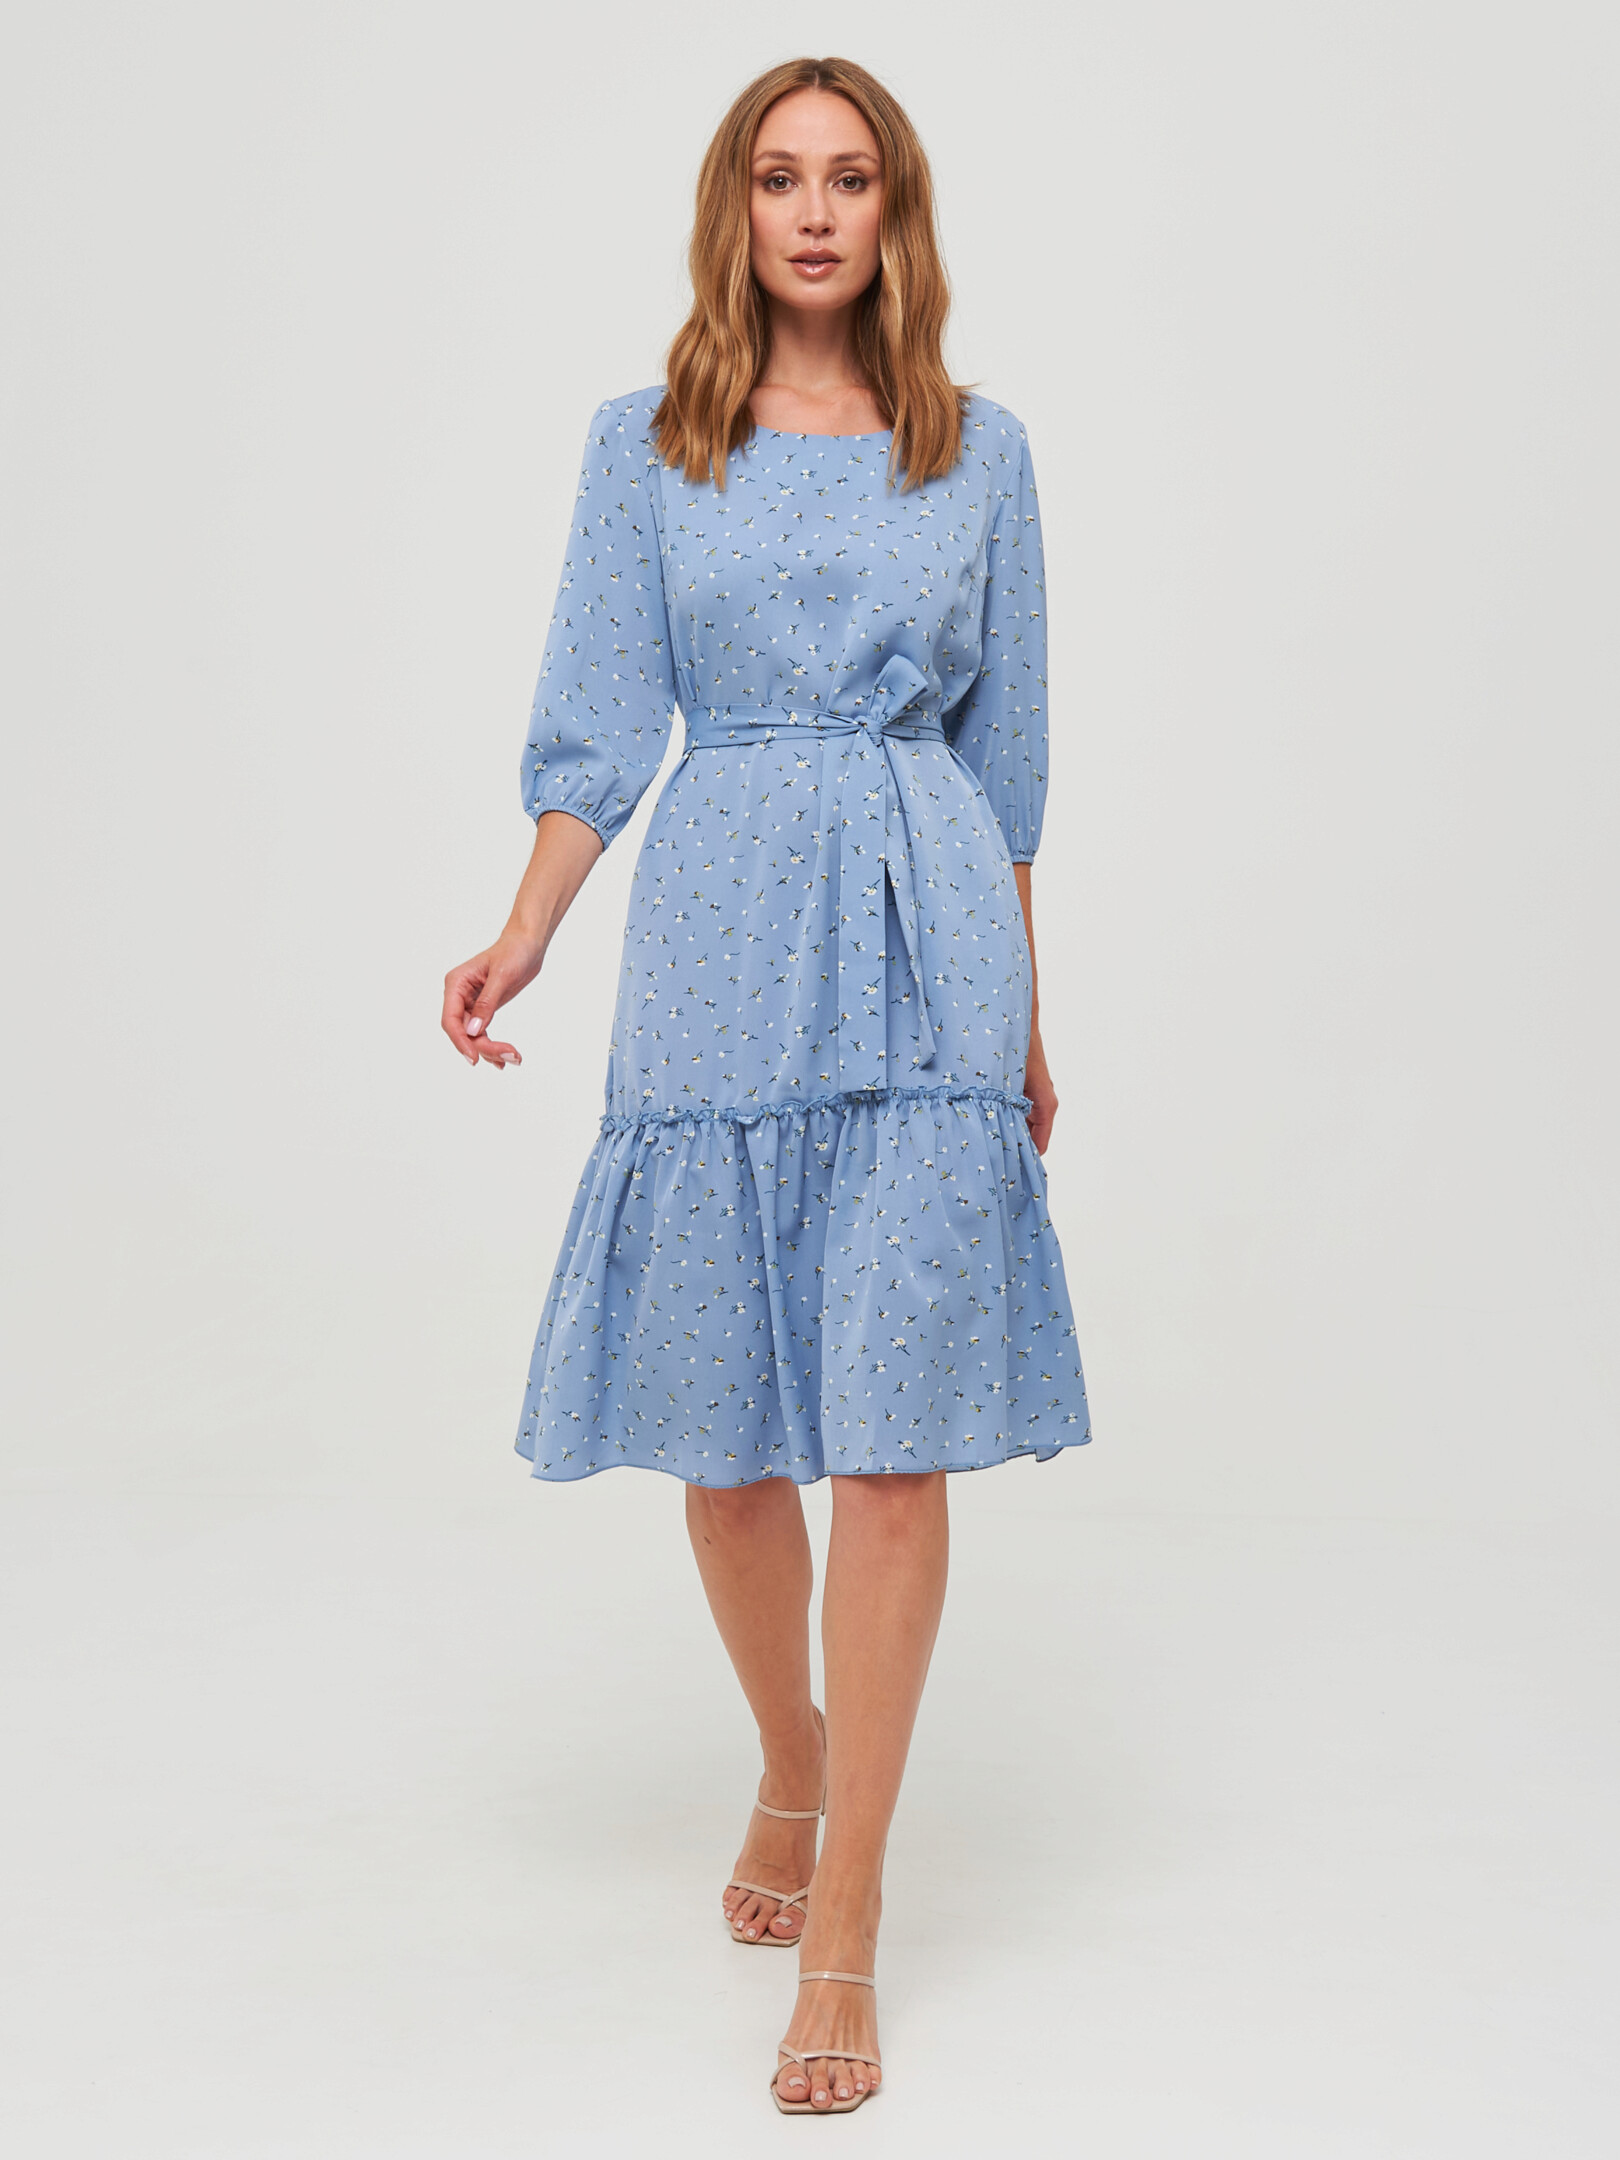 Платье женское TANINI 68645 голубое 56 RU